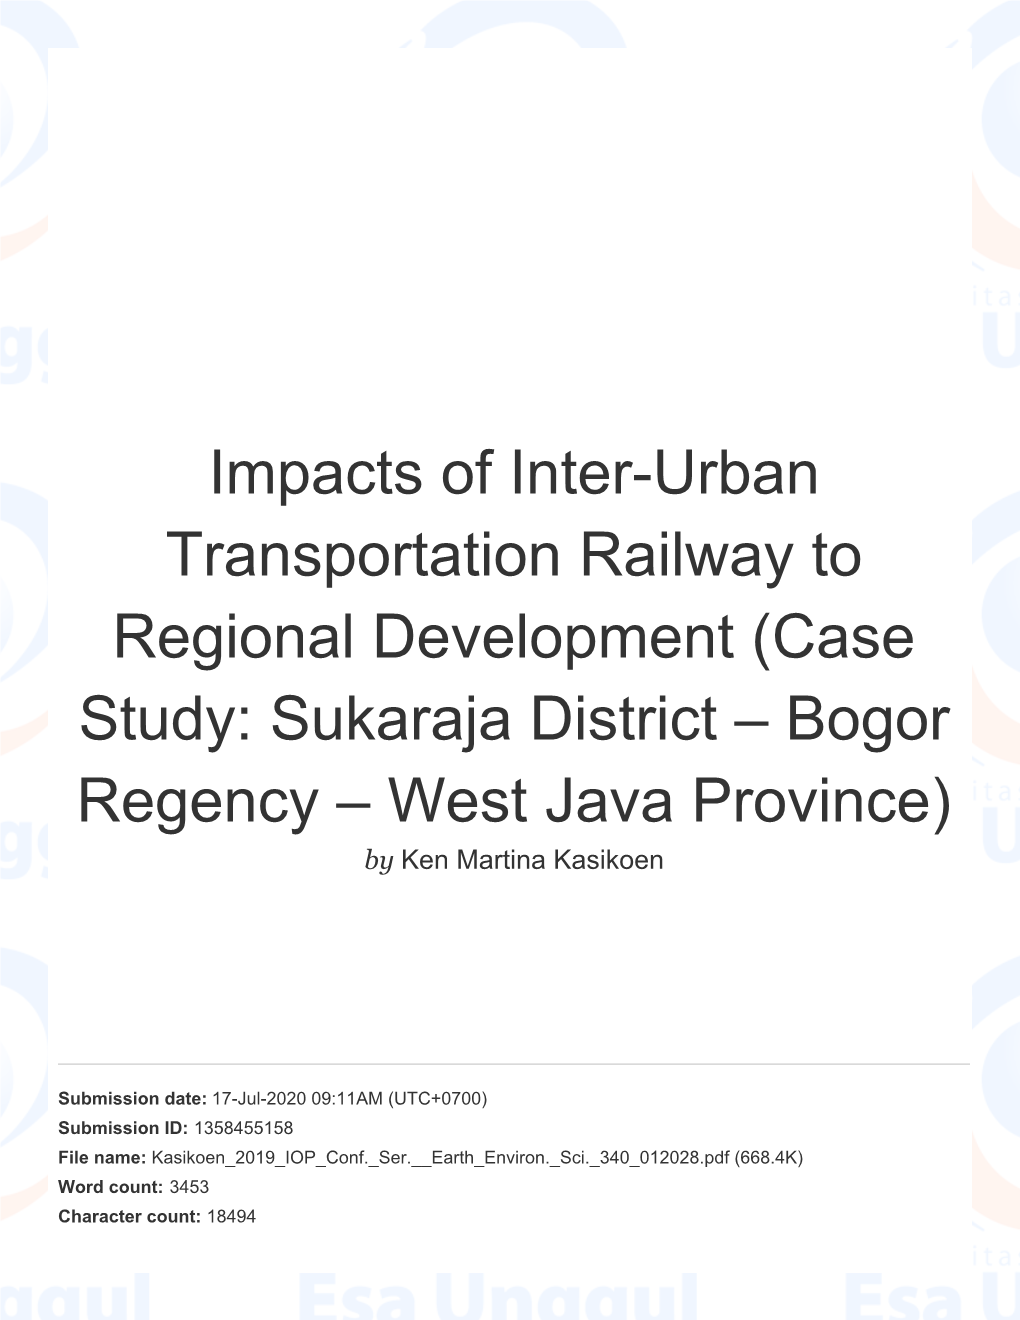 Impacts of Inter-Urban Transportation Railway to Regional Development (Case Study: Sukaraja District – Bogor Regency – West Java Province) by Ken Martina Kasikoen